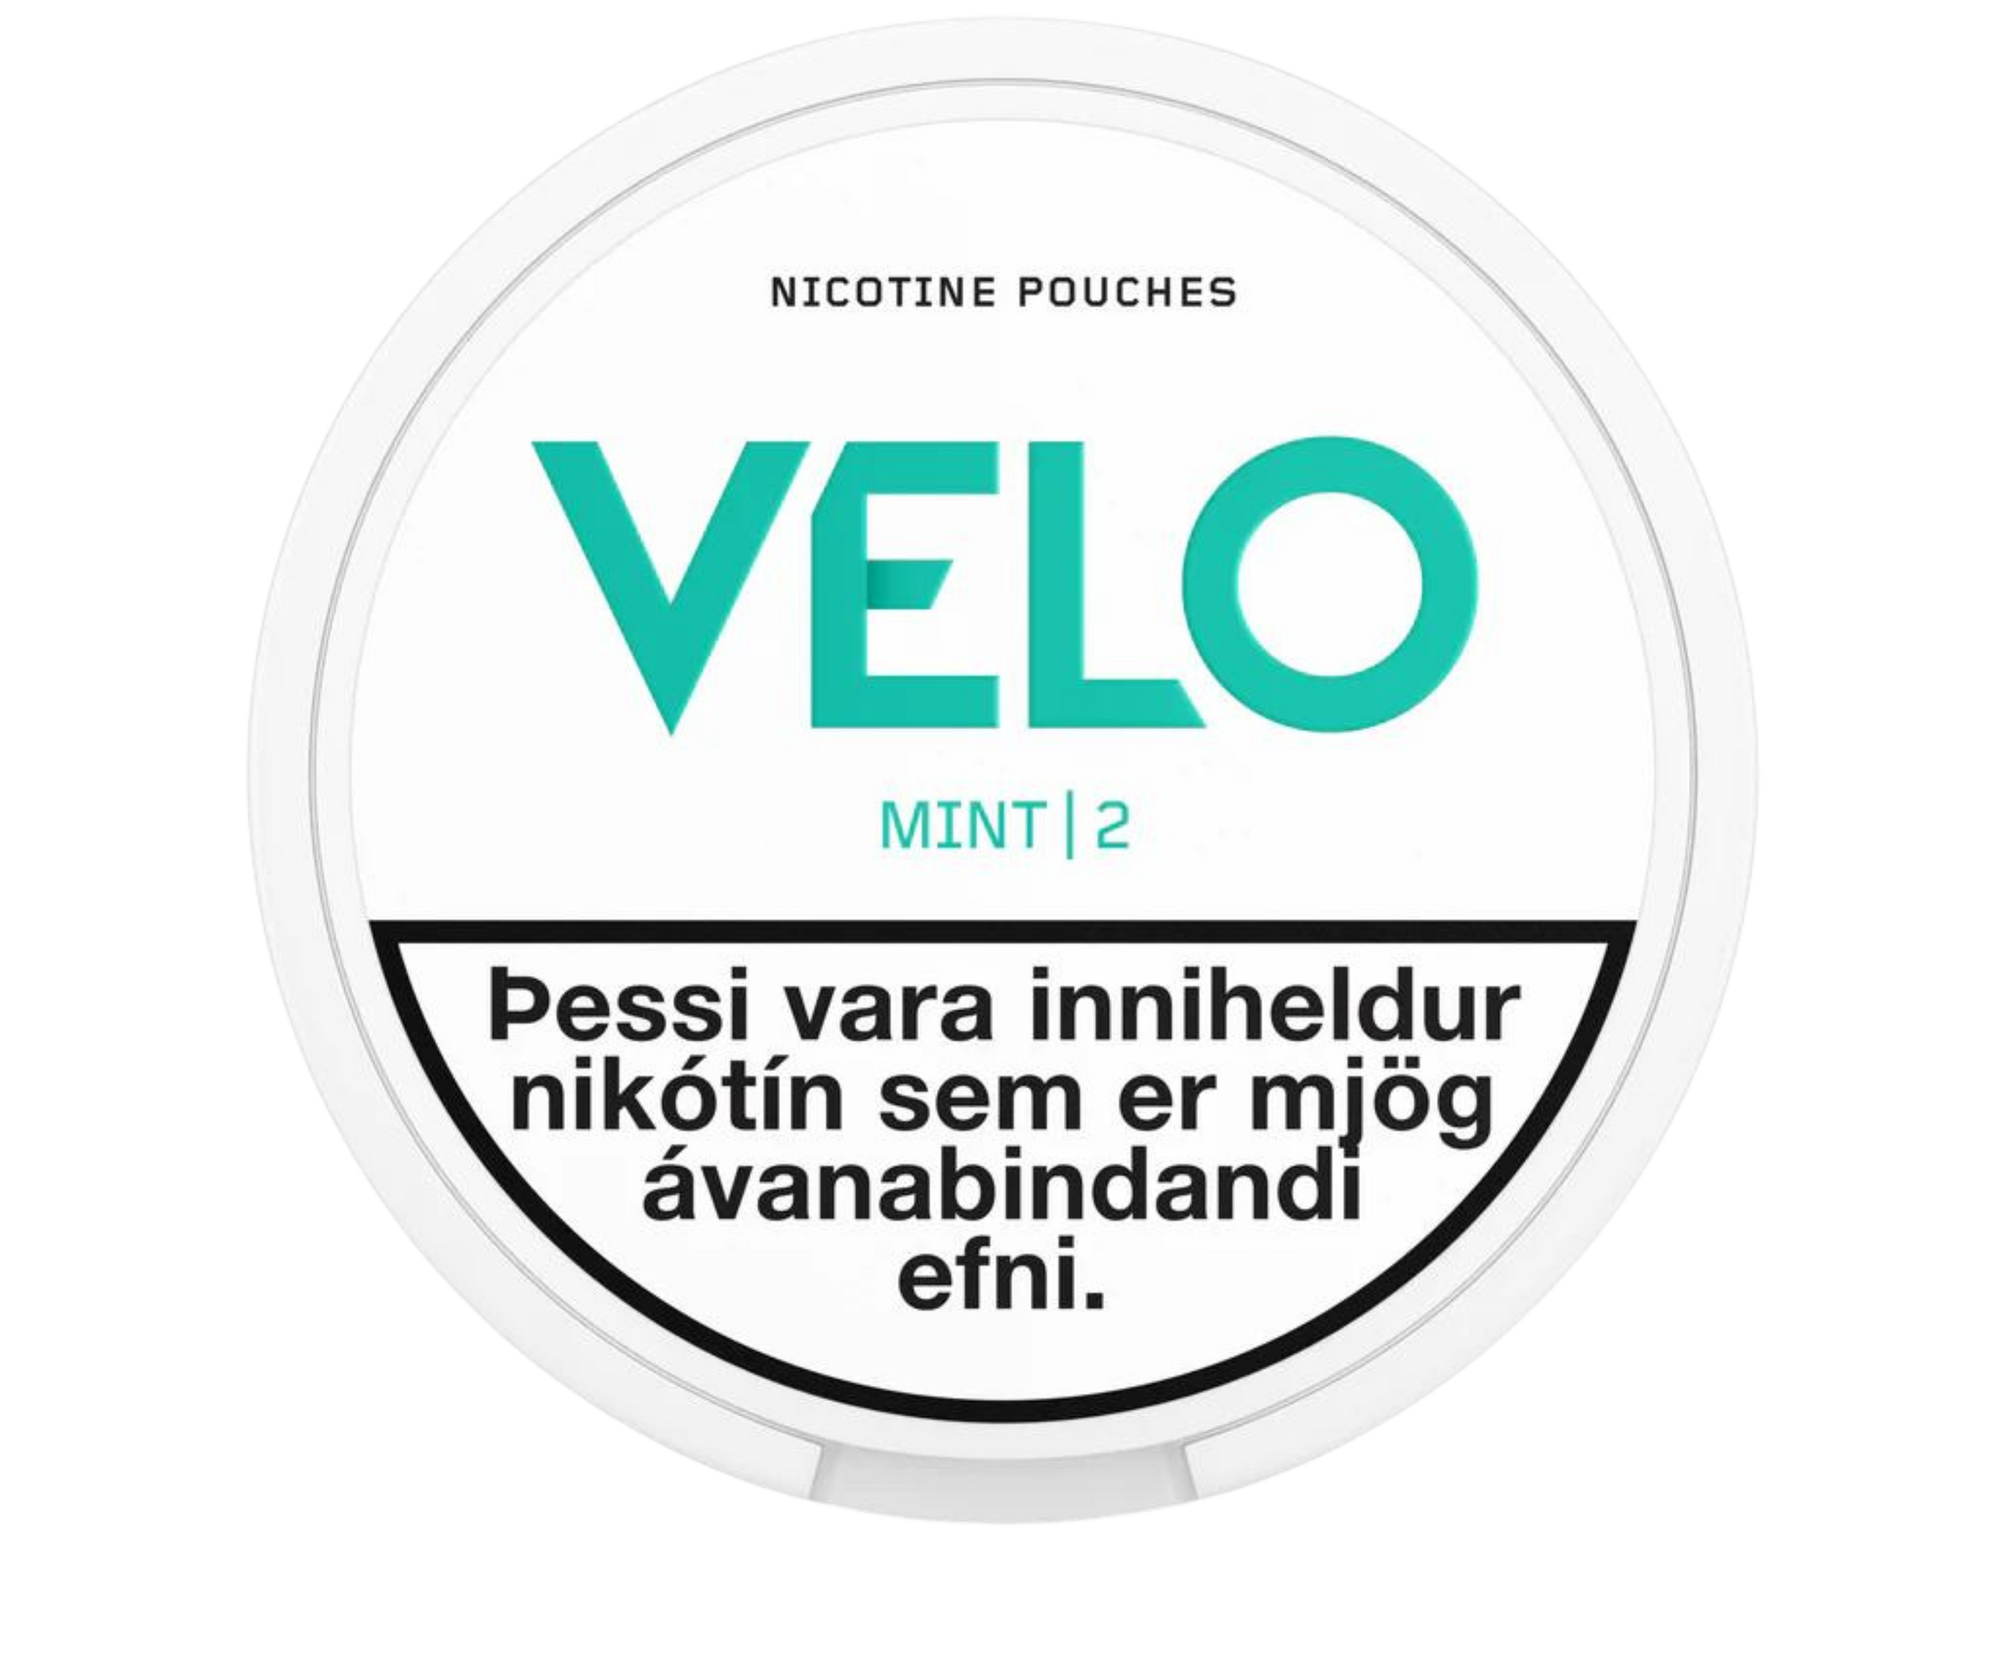 VELO Mint - Nammi.net